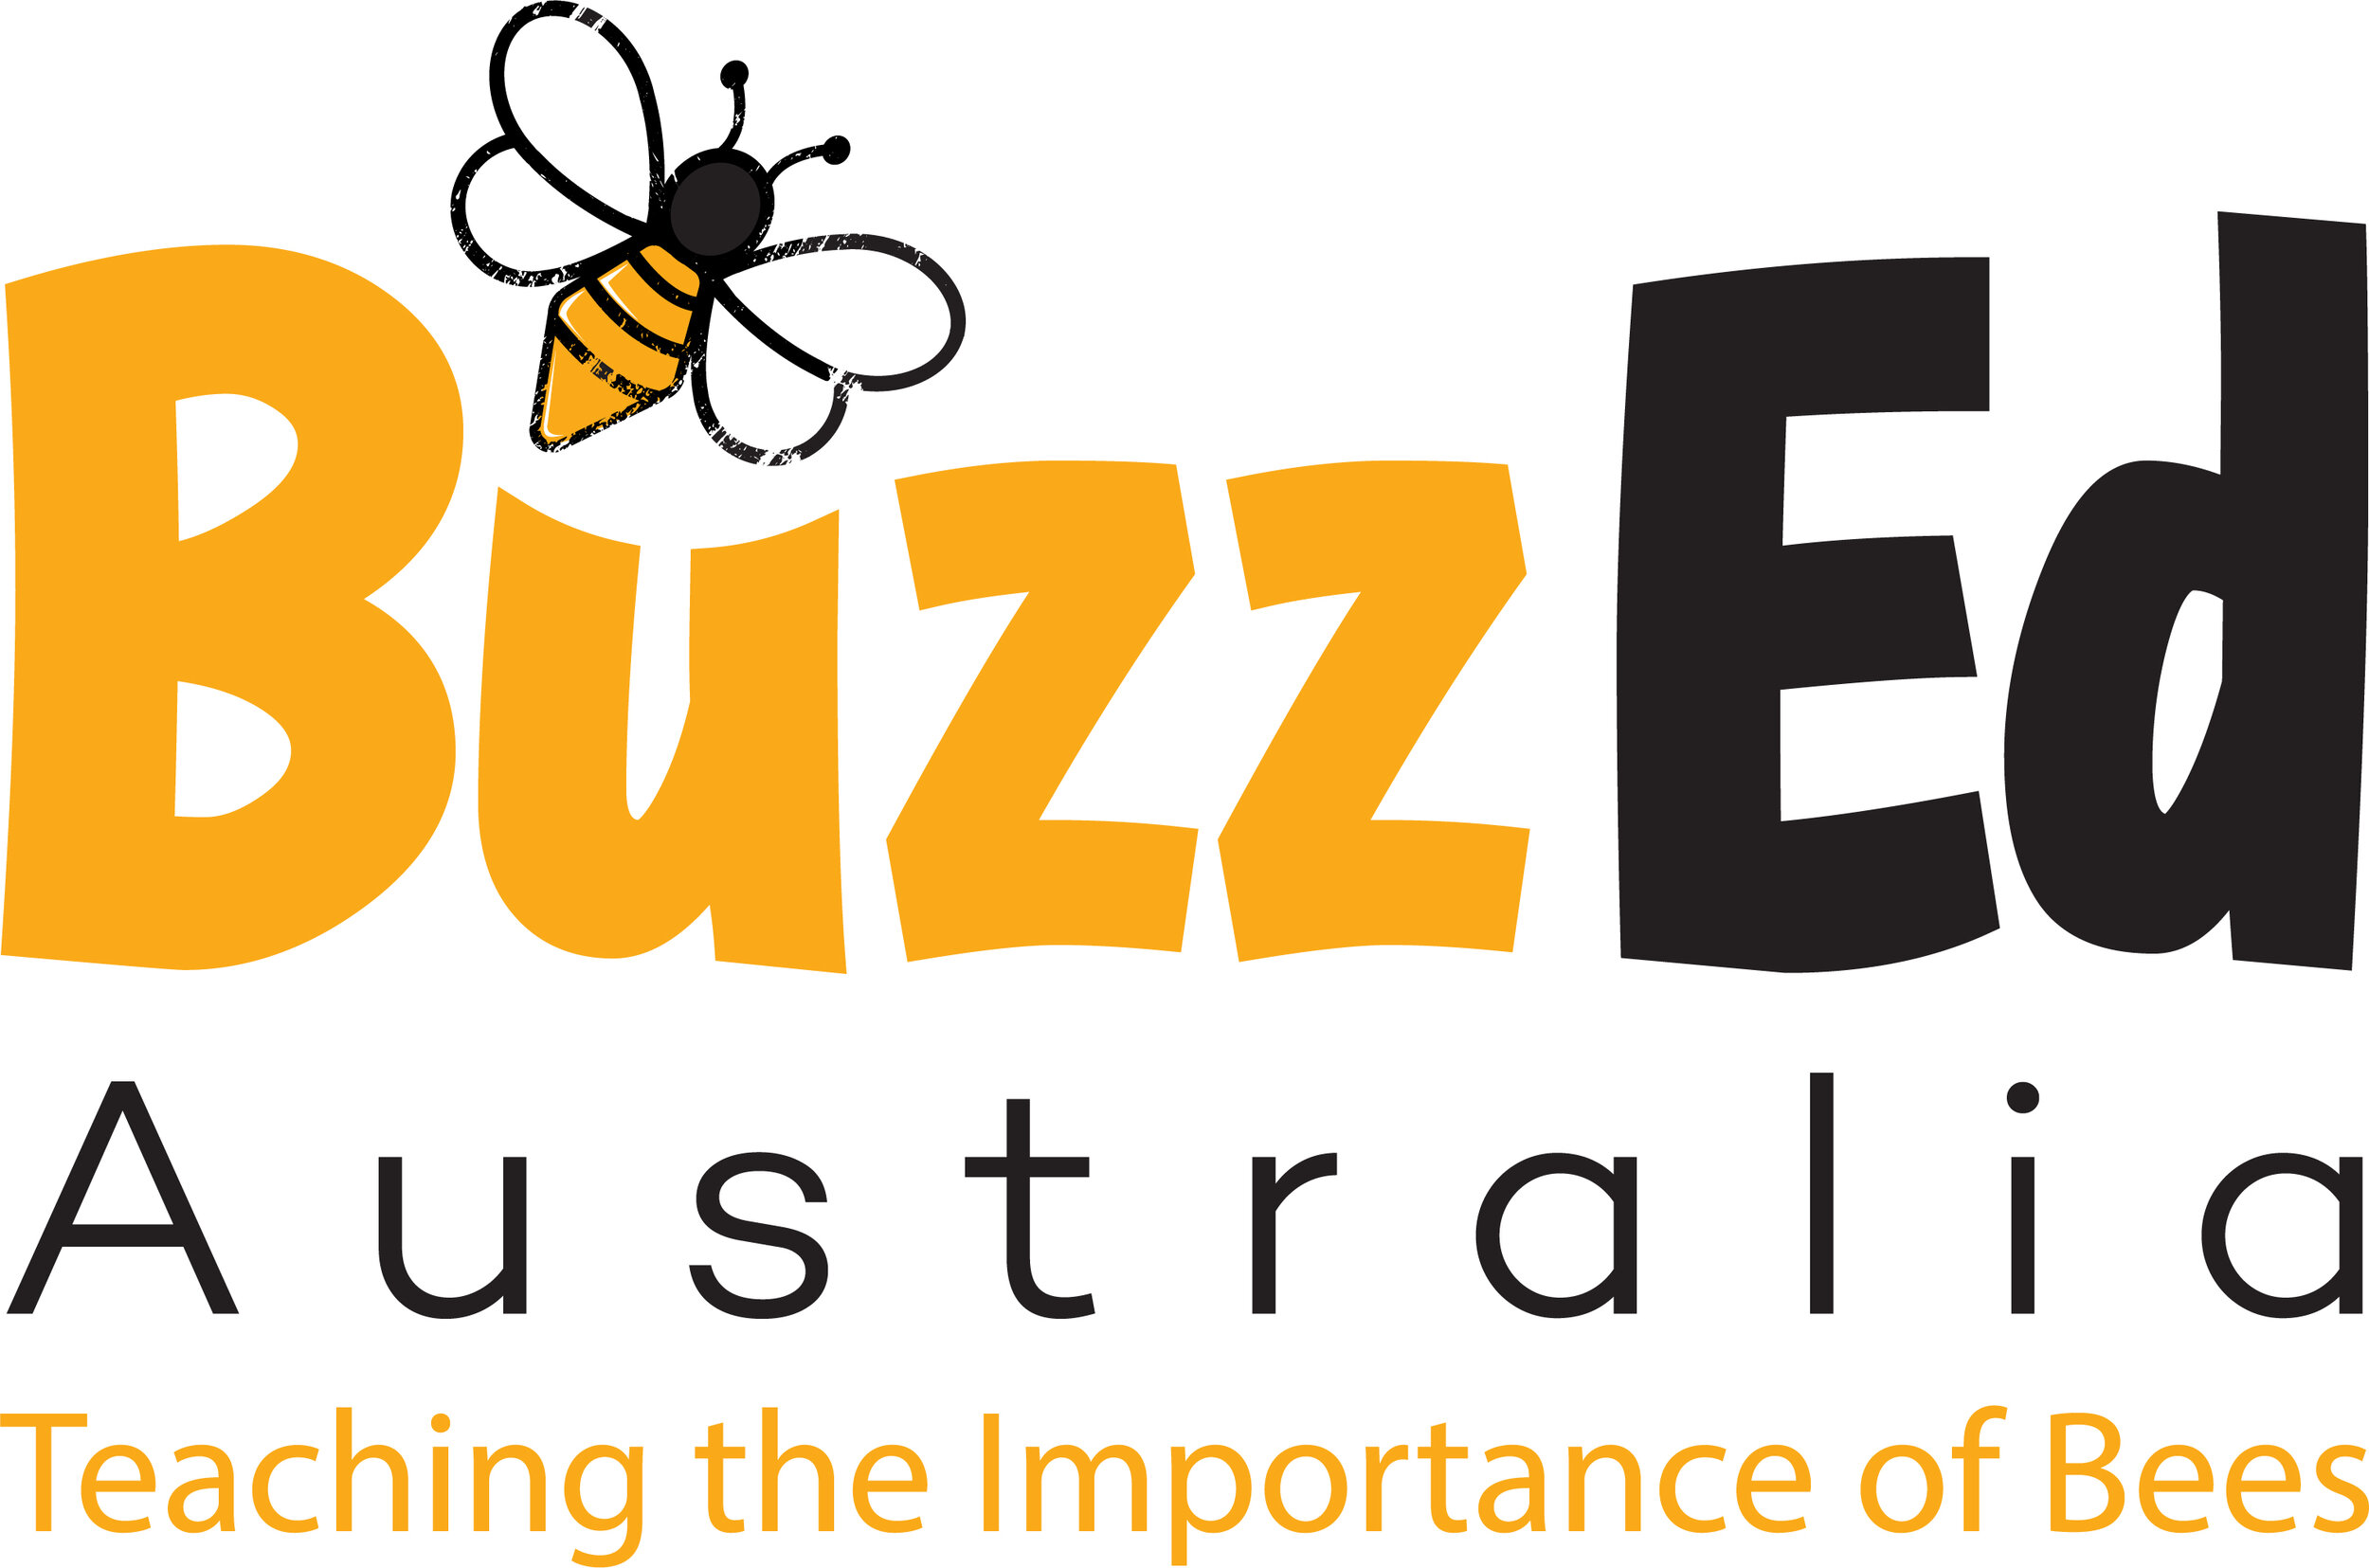 Buzz Ed Australia